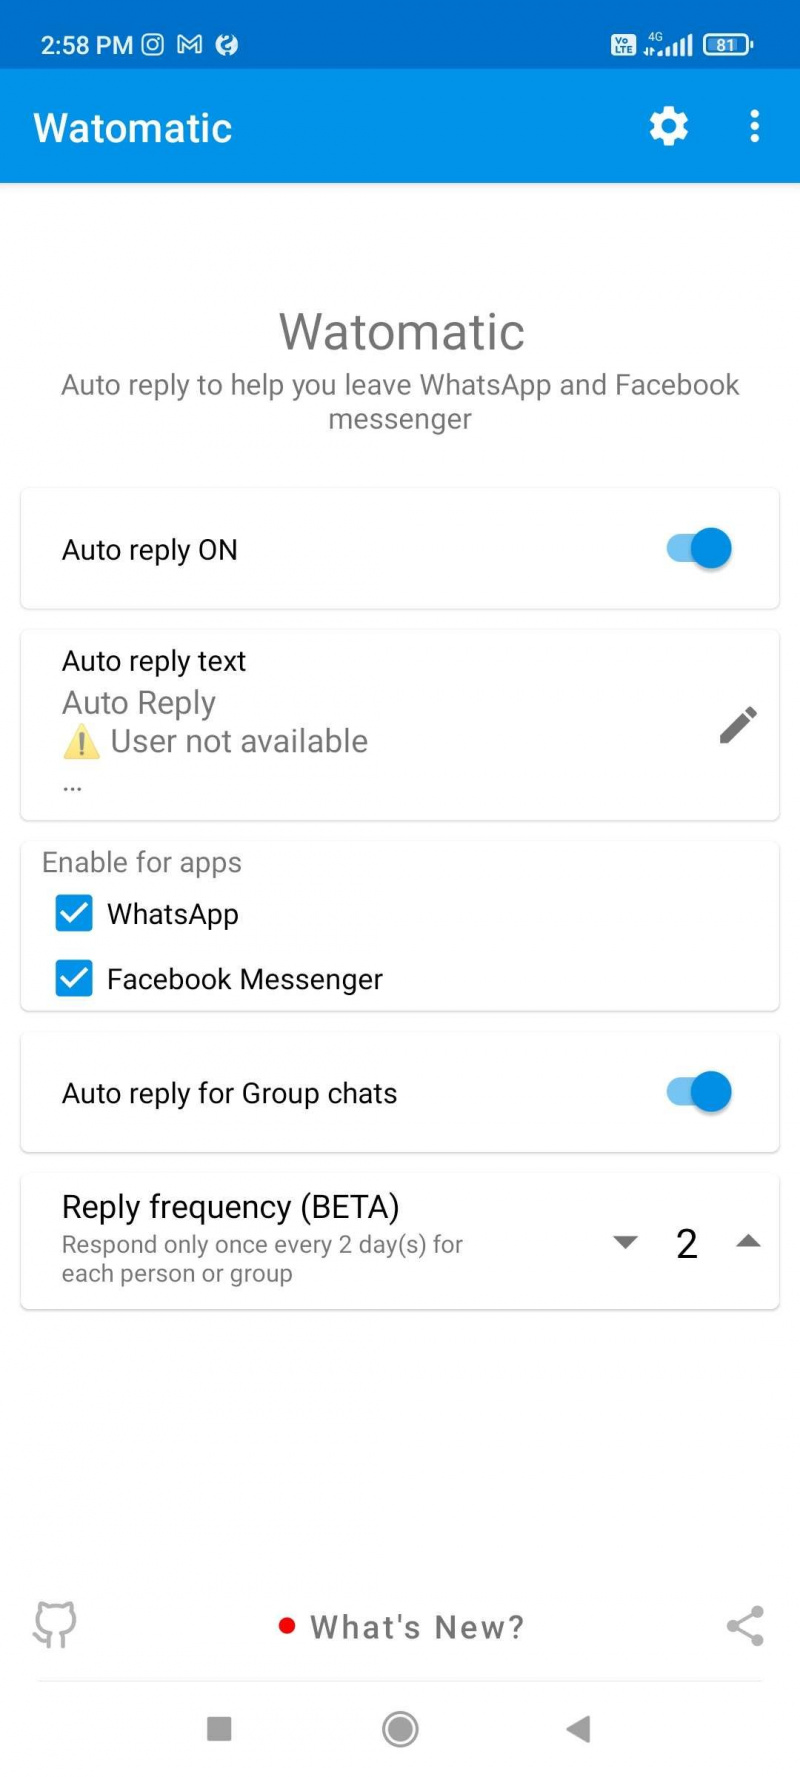   Watomatic هو أبسط طريقة لإعداد رسالة الرد التلقائي لإرسالها على WhatsApp عندما تقوم بذلك're unavailable